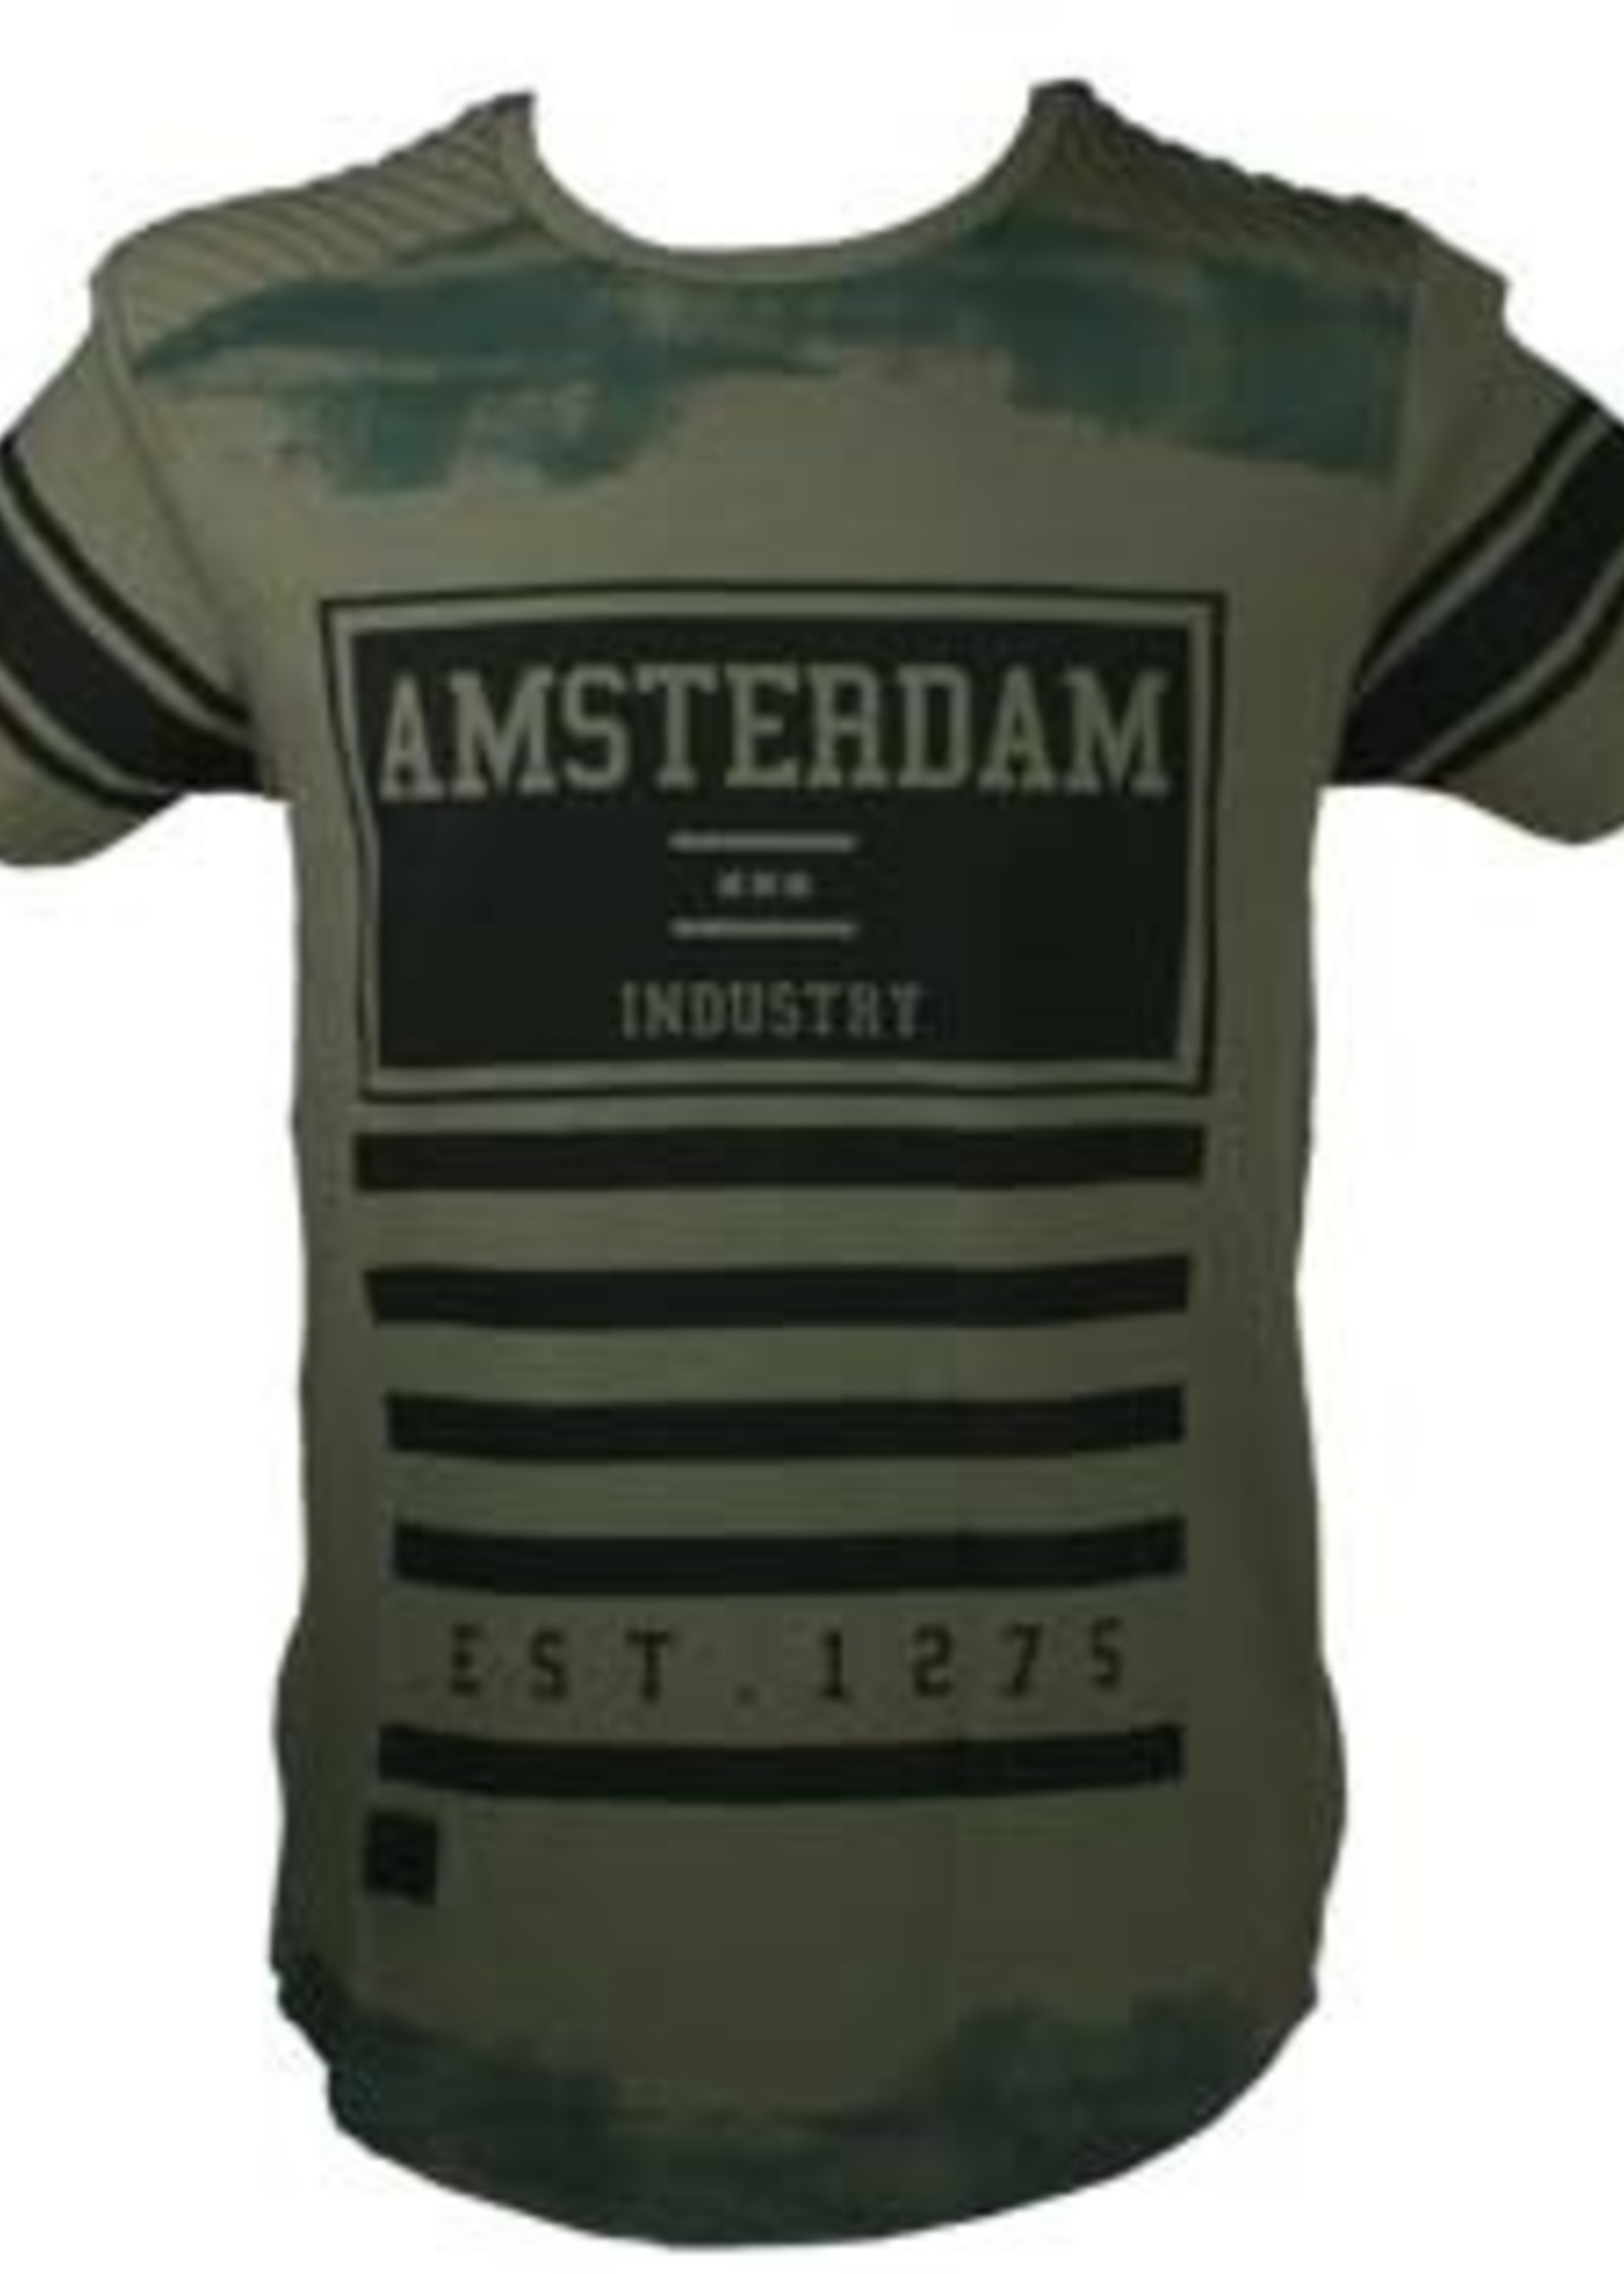 T-shirt 1275 stripes Green/Black